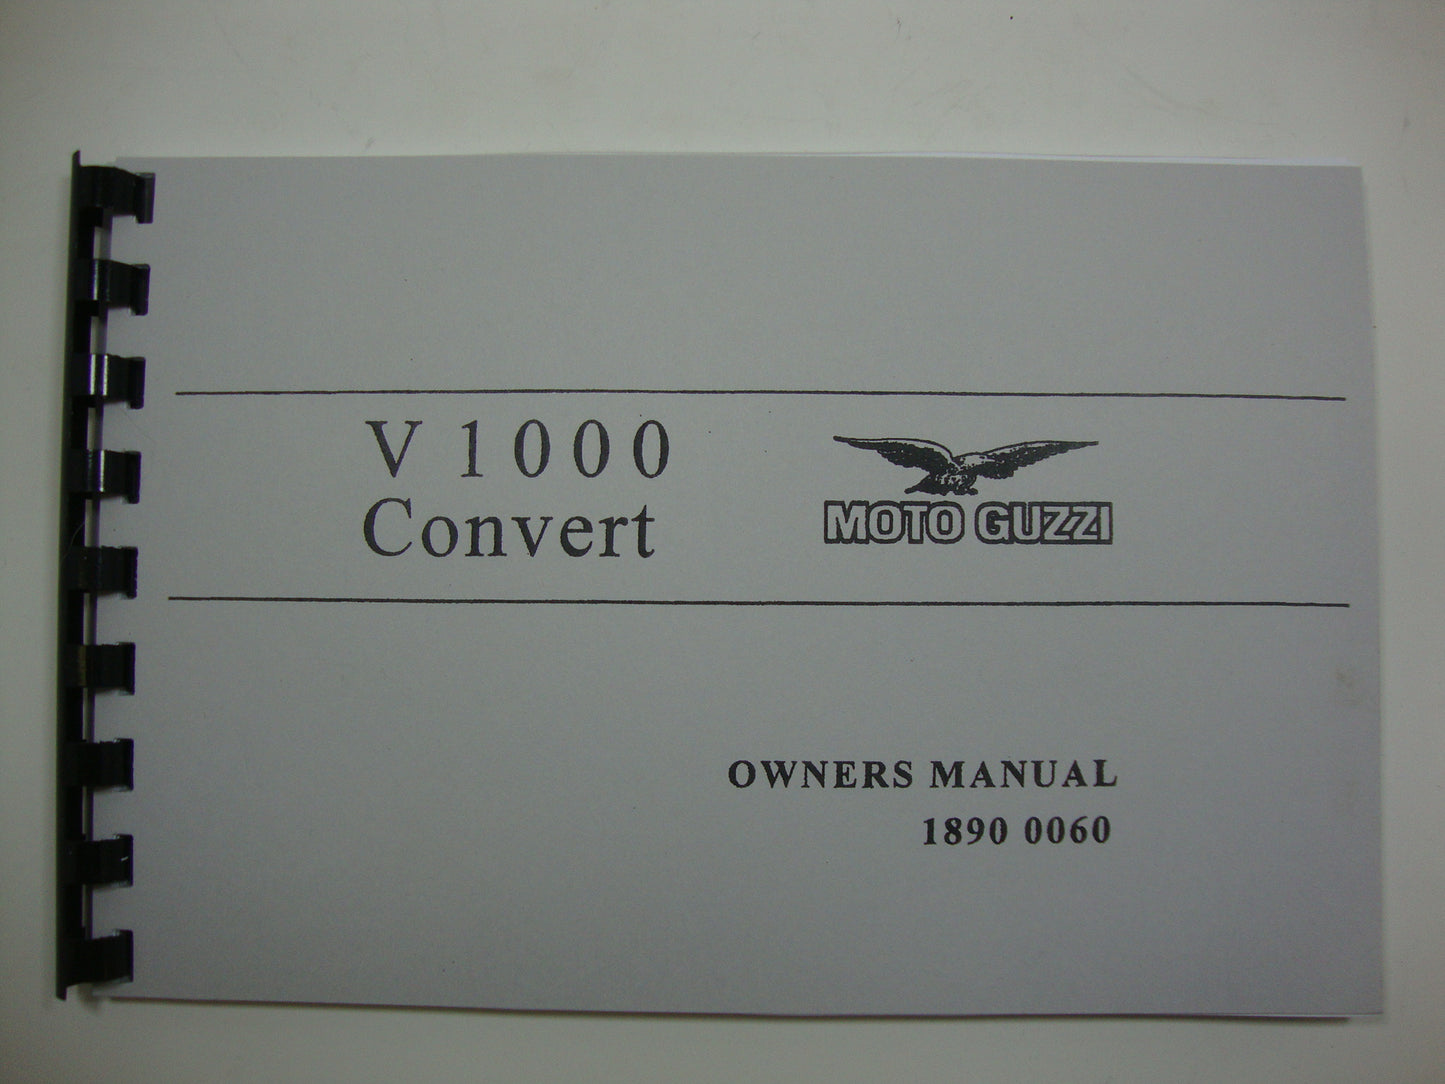 Convert Owners Manual (#18900060)